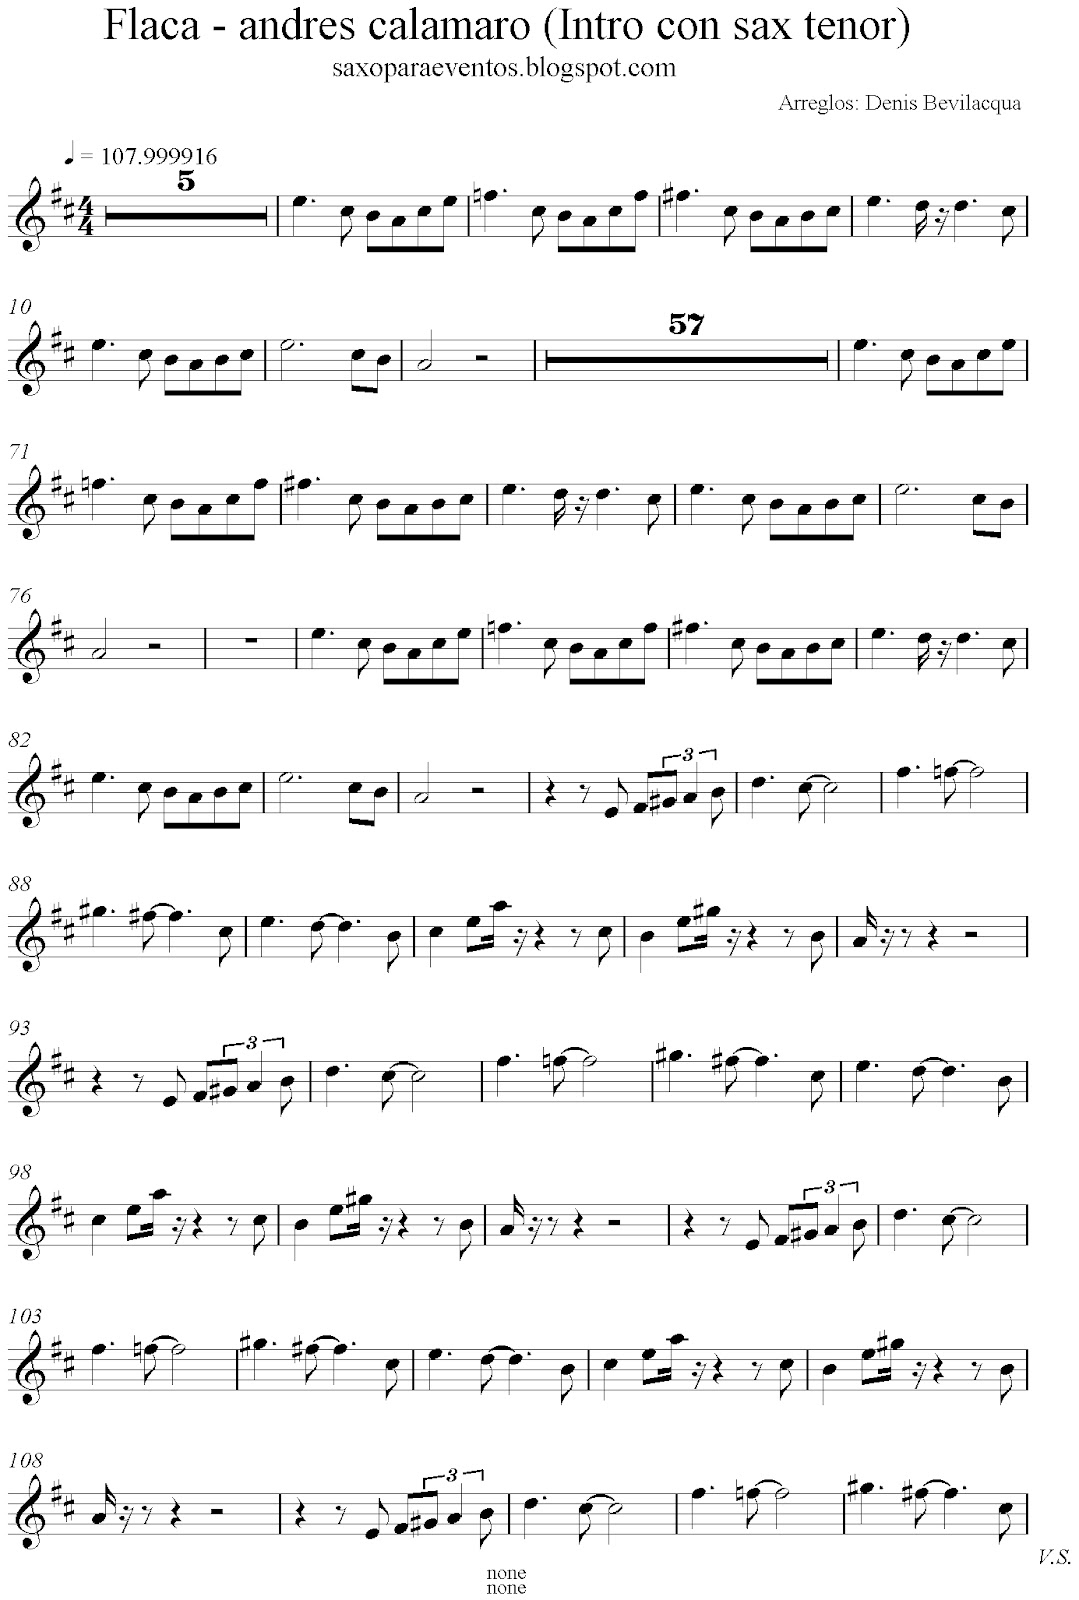 Acercarse repentinamente el fin Partitura gratis de "Flaca" de Andres Calamaro - Partituras y pistas para  saxo | Sheet music and Play Along for sax